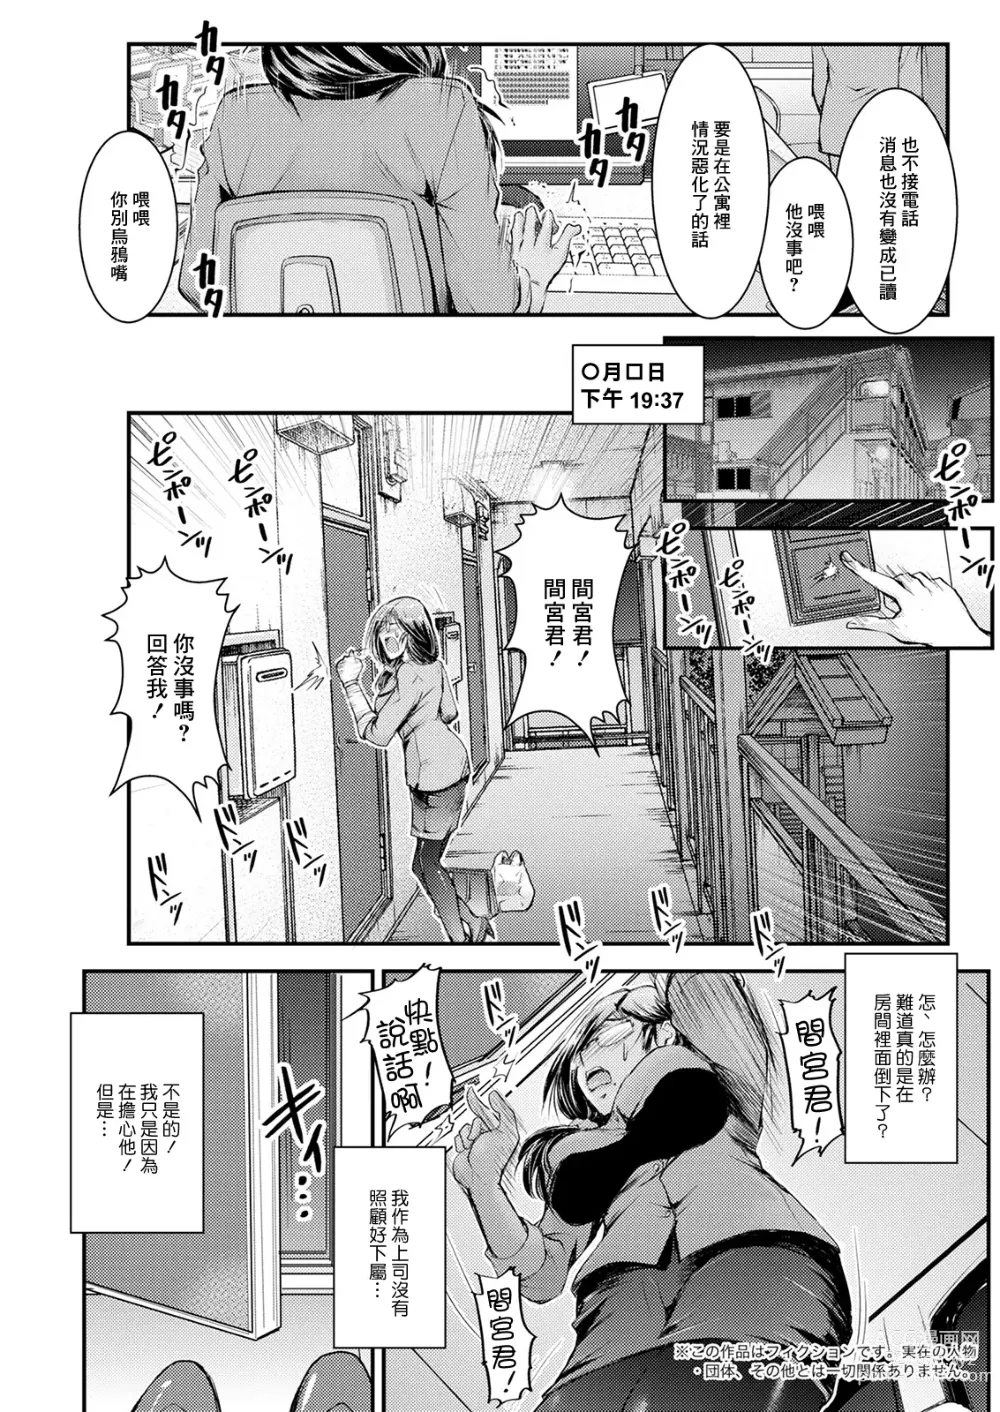 Page 3 of manga Shunin wa Dekiru Joushi